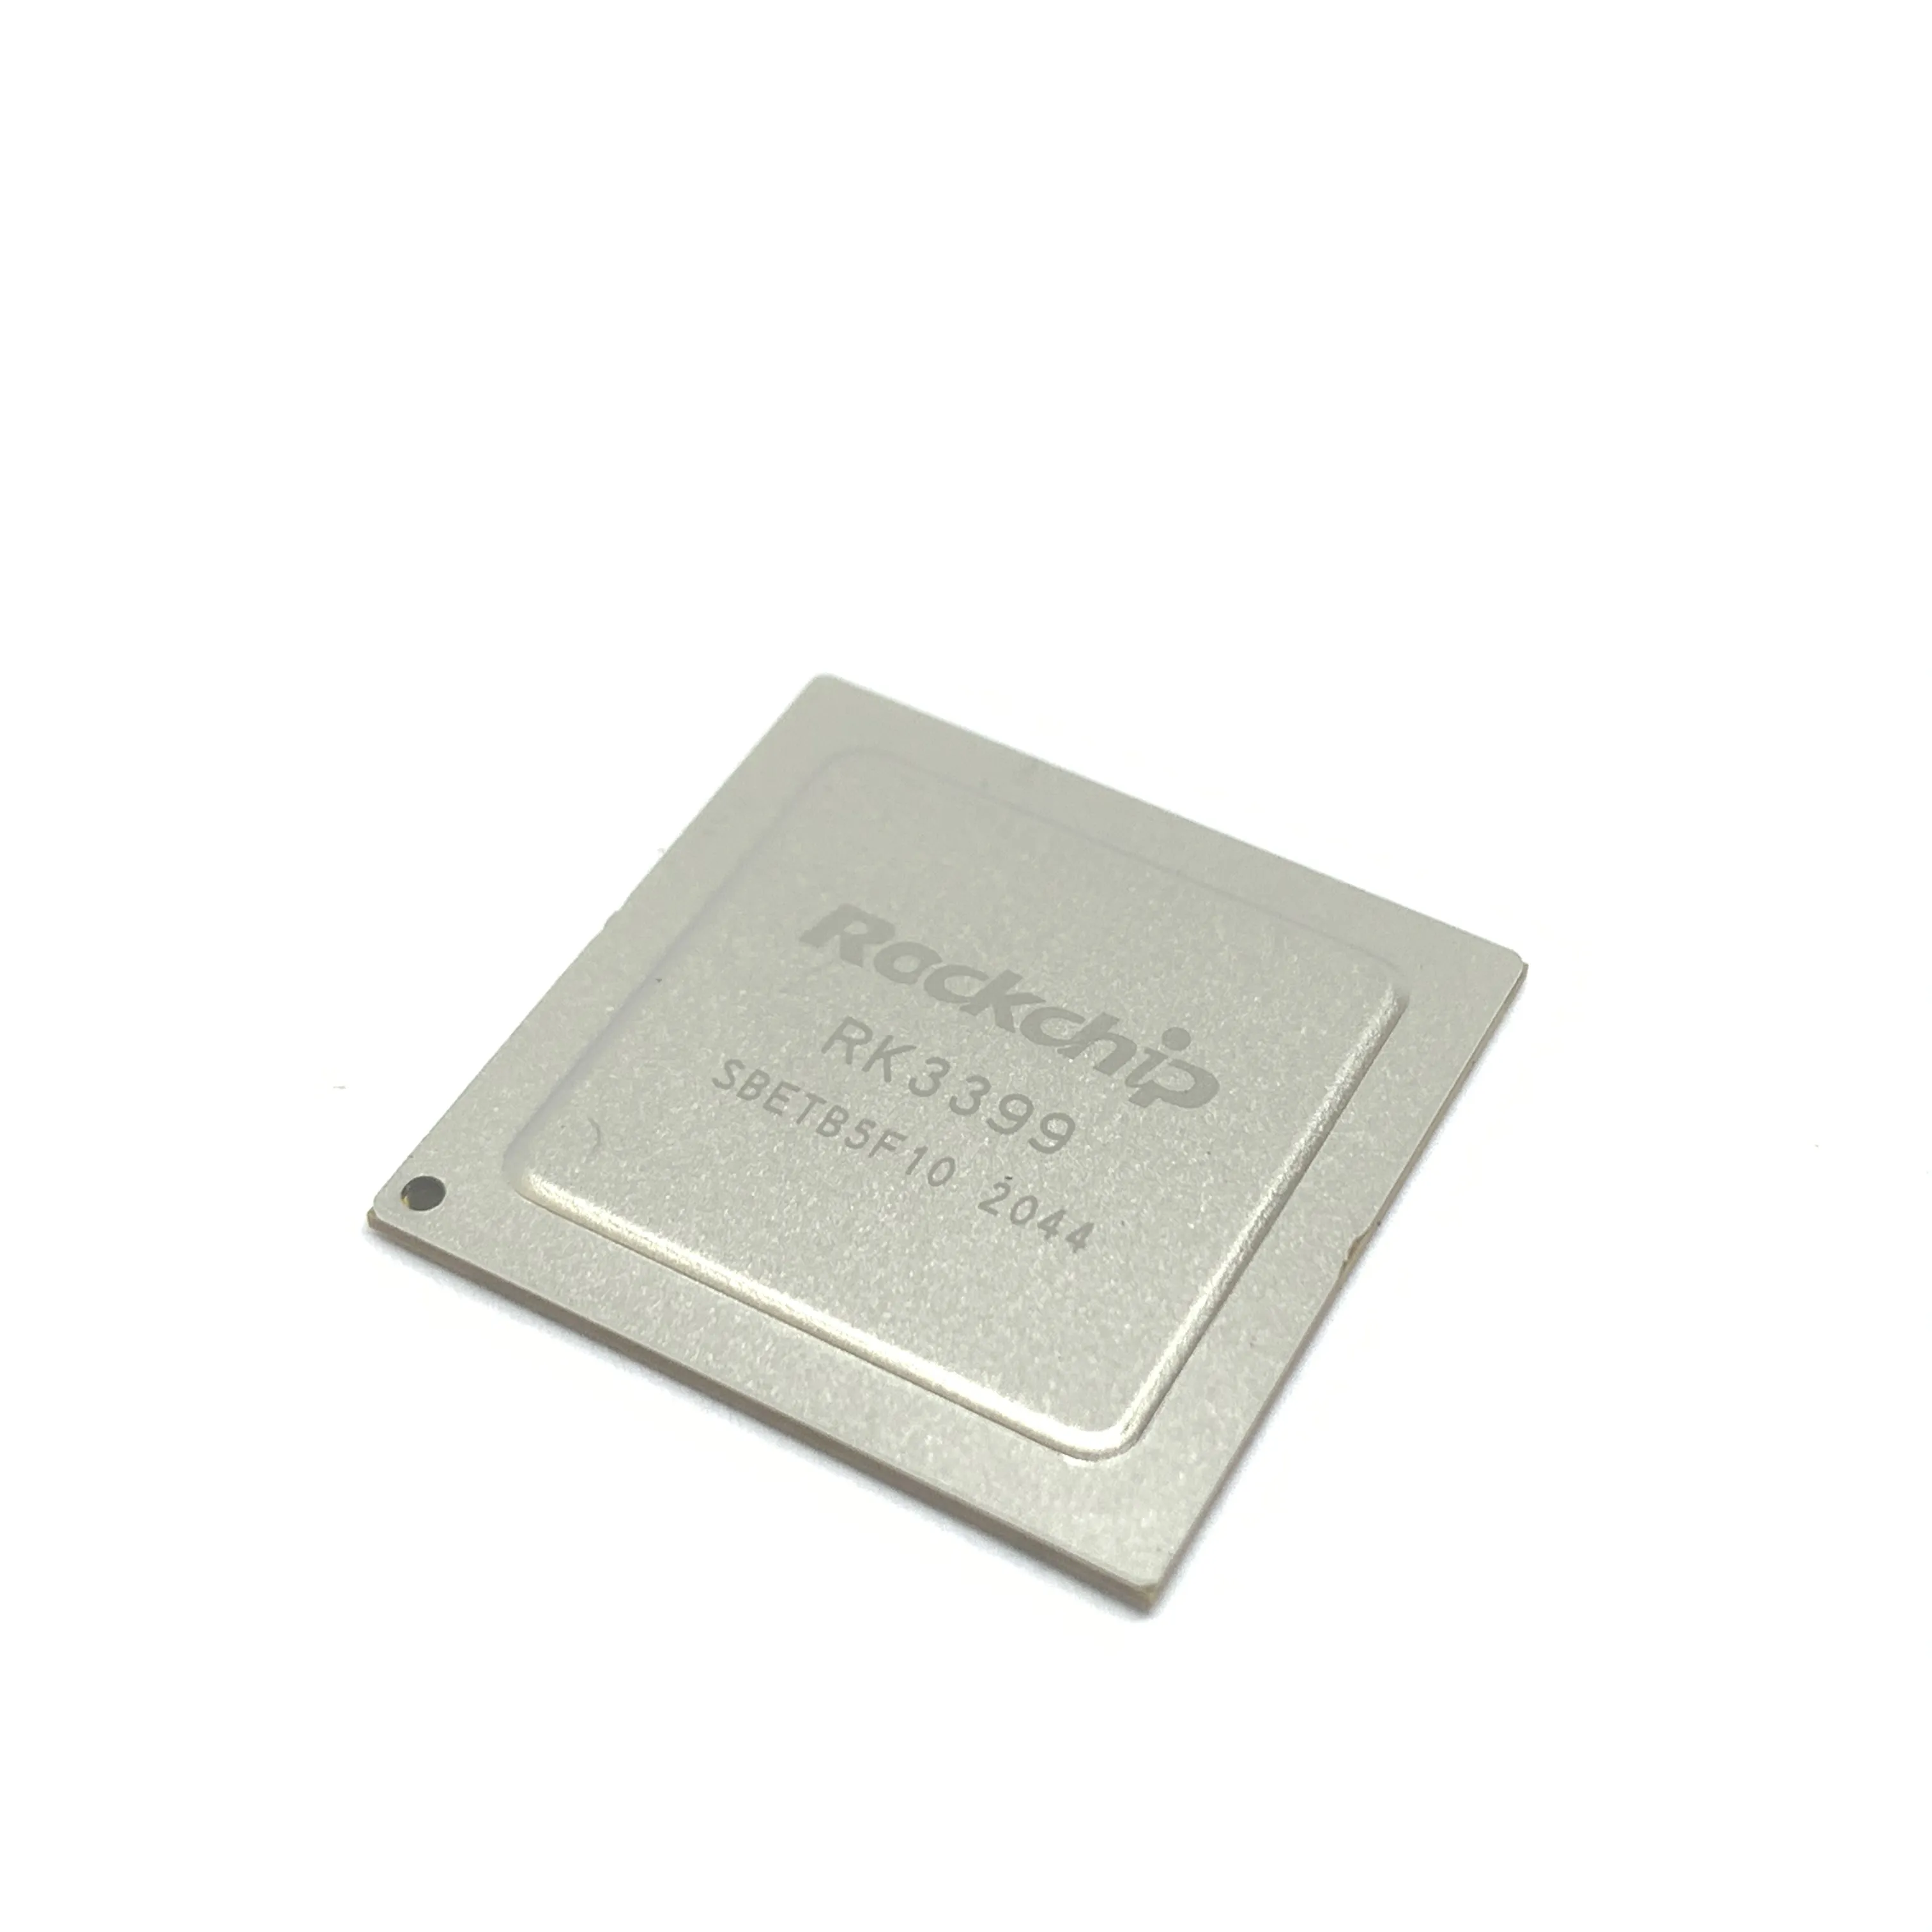 Chip Market Merrillchip Original IC Integrated Circuits CPU Processor BGA Chips Rockchip RK3399 RK808D Tv Box Ic